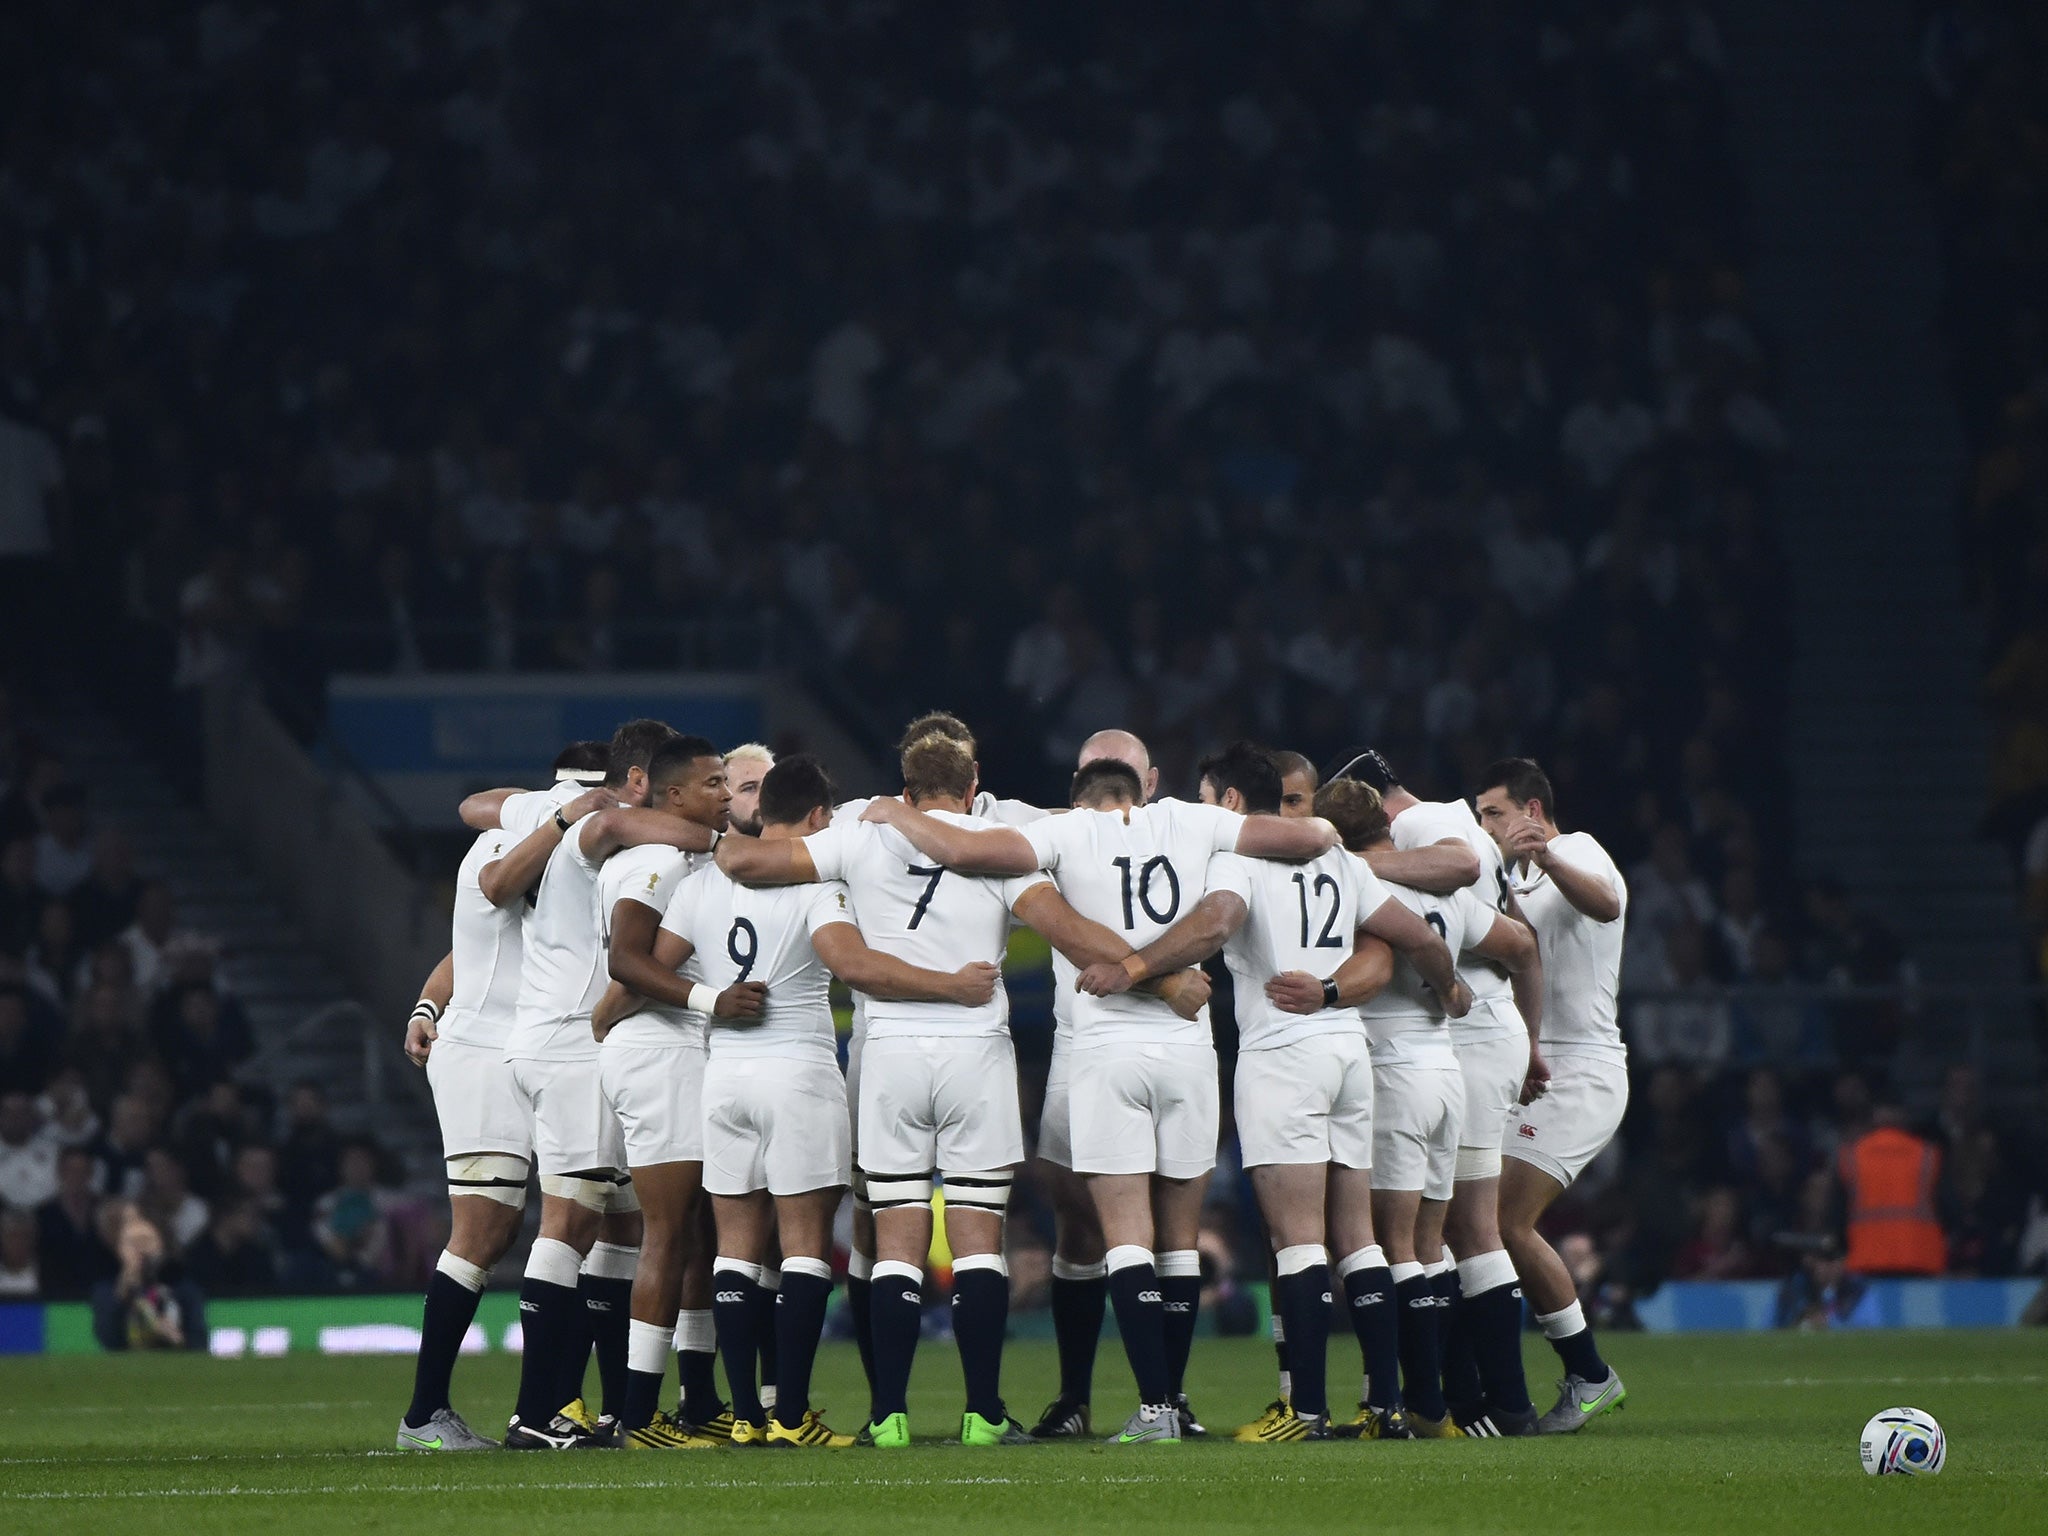 England's players huddle prior to the match against Australia at Twickenham stadium